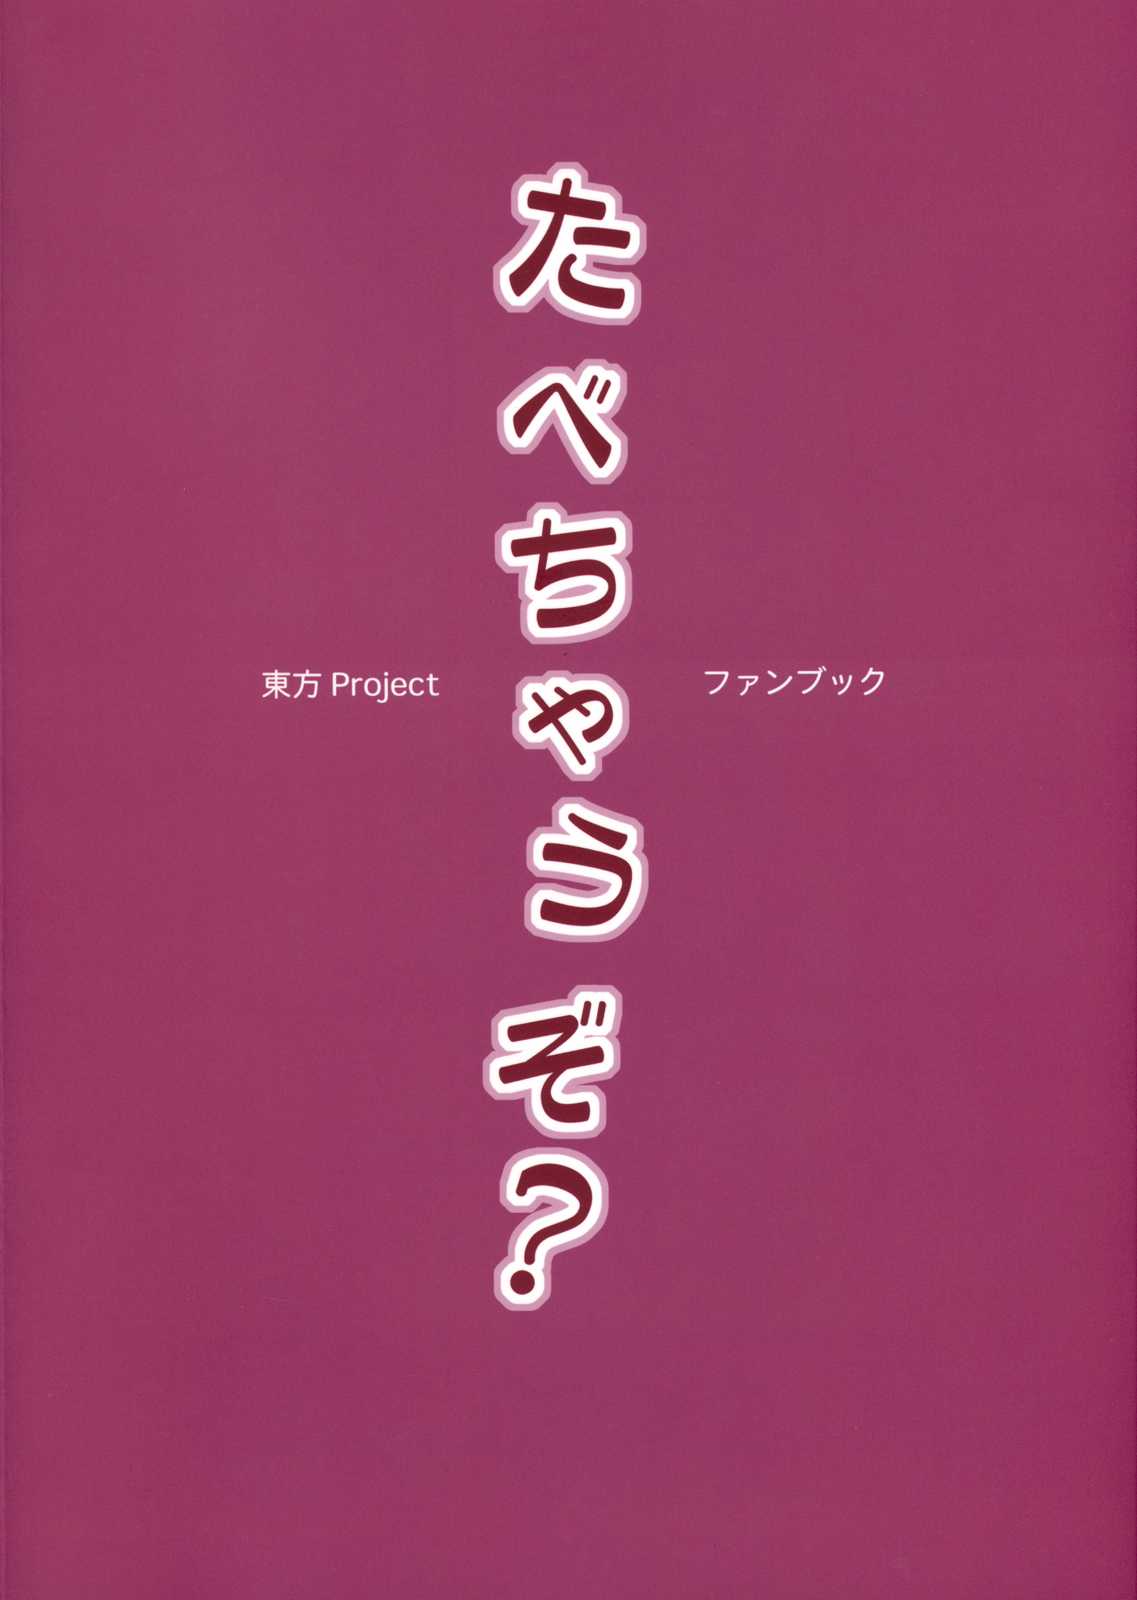 (C80) [BlueMage (Aoi Manabu)] Tabechauzo? (Touhou Project) [Spanish] [Japandream] (C80) [BlueMage(あおいまなぶ)] たべちゃうぞ？ (東方 Project) [スペイン語] [Japandream]